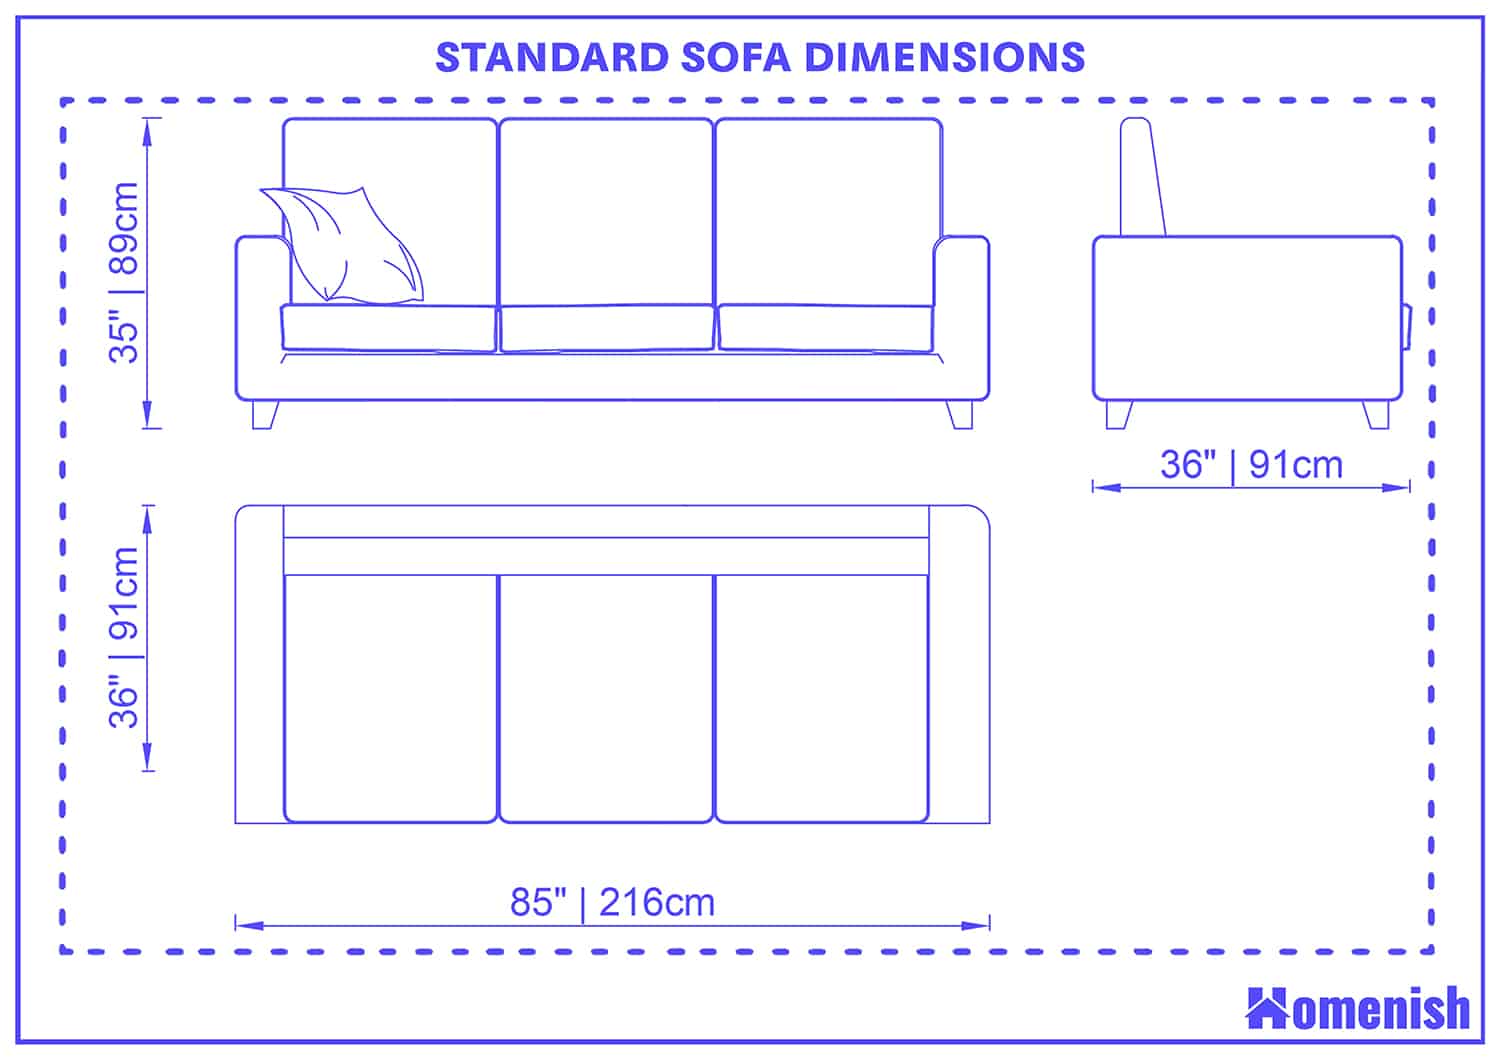 Standard Sofa Dimensions 2 